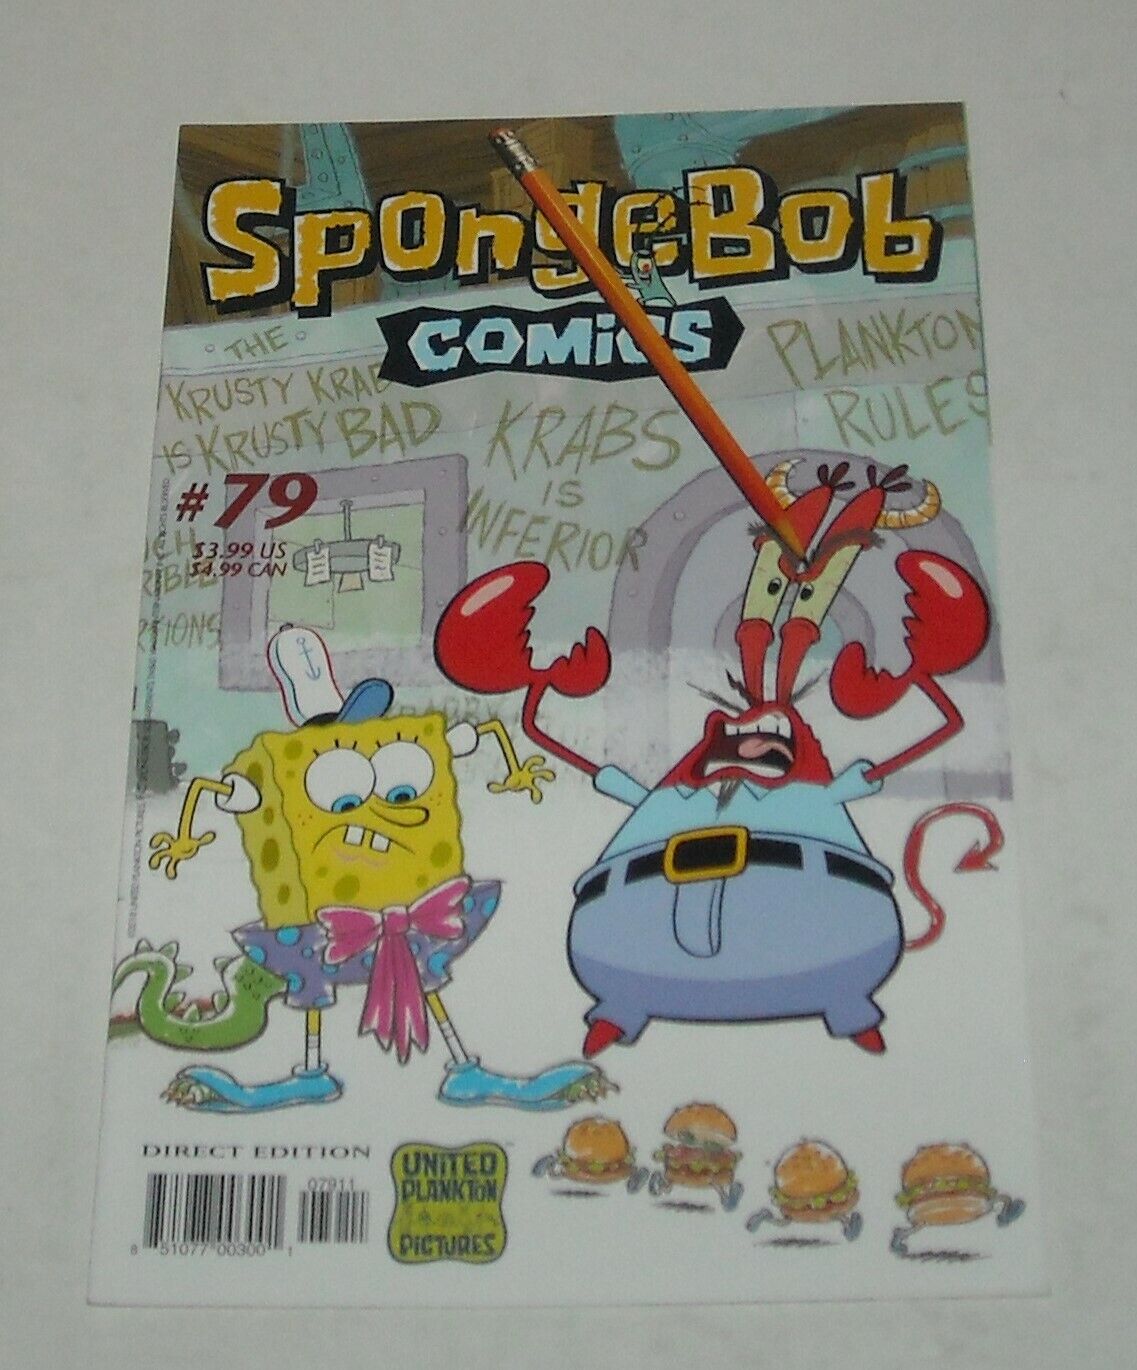 SPONGEBOB COMICS # 79 2018 BONGO TV CARTOON COMIC BOOK UNITED PLANKTON PICTURES